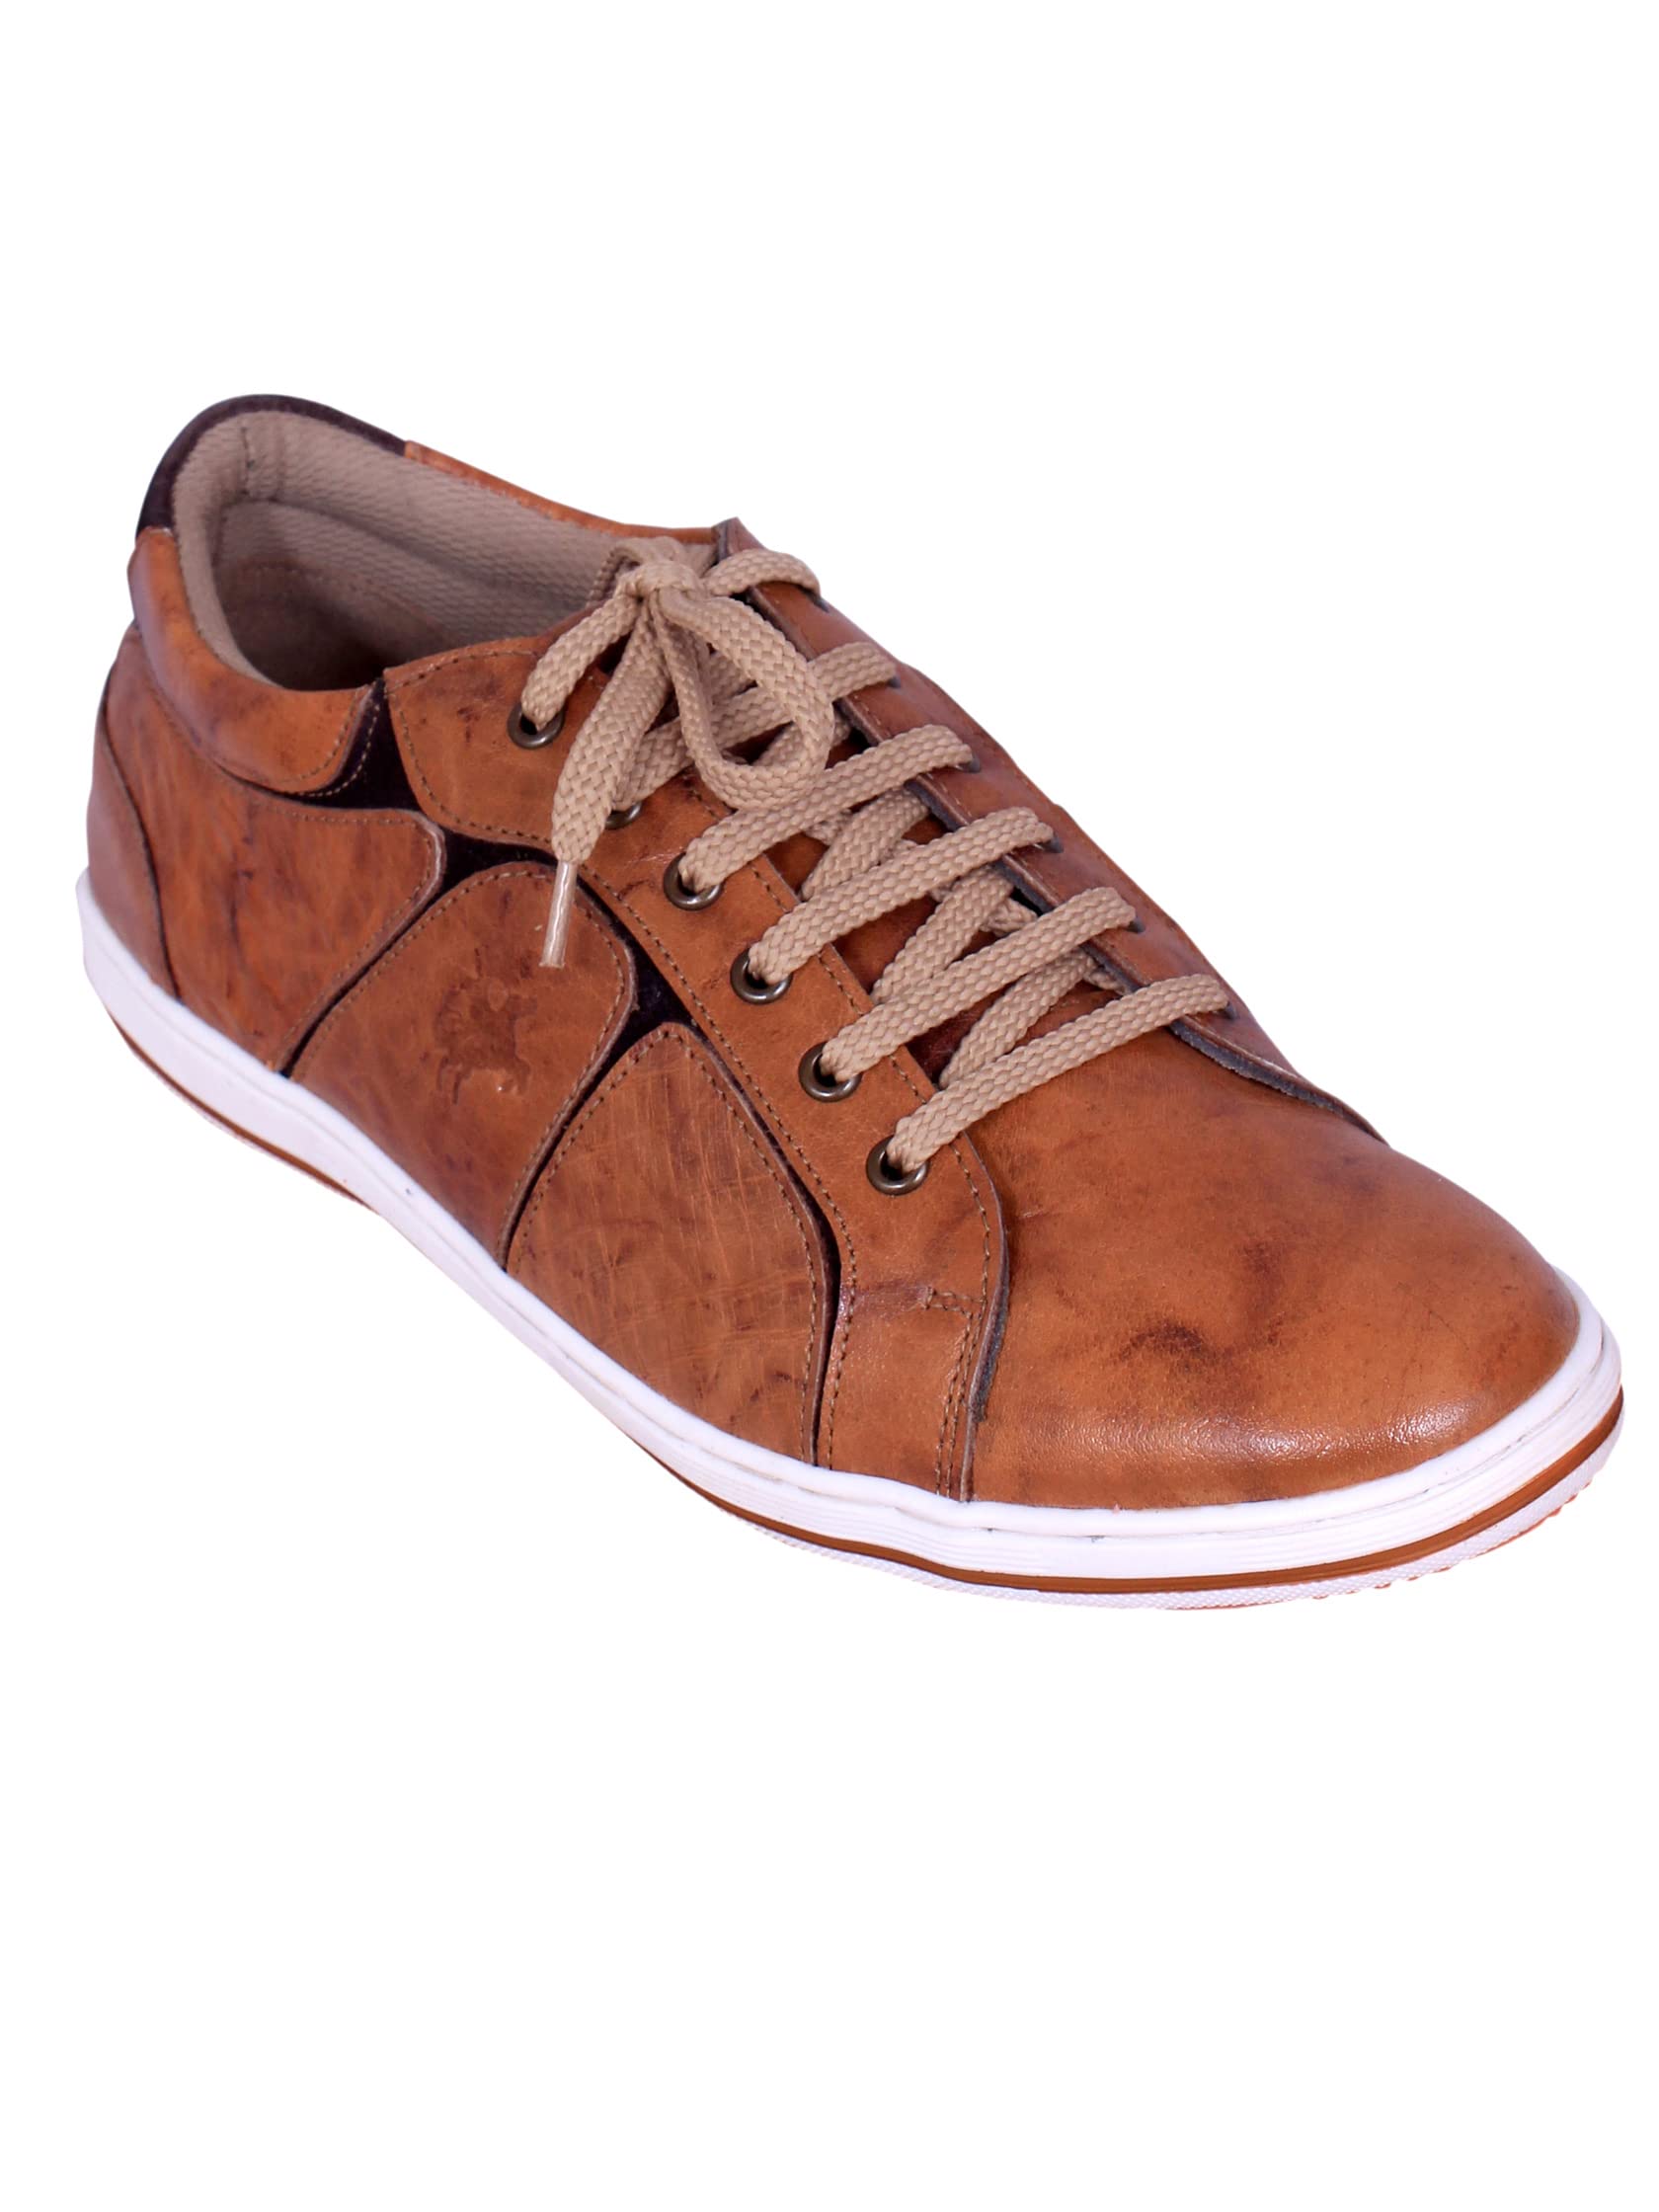 Buckaroo: Miller FullGrain Natural Leather Tan Casual Shoes for Mens 